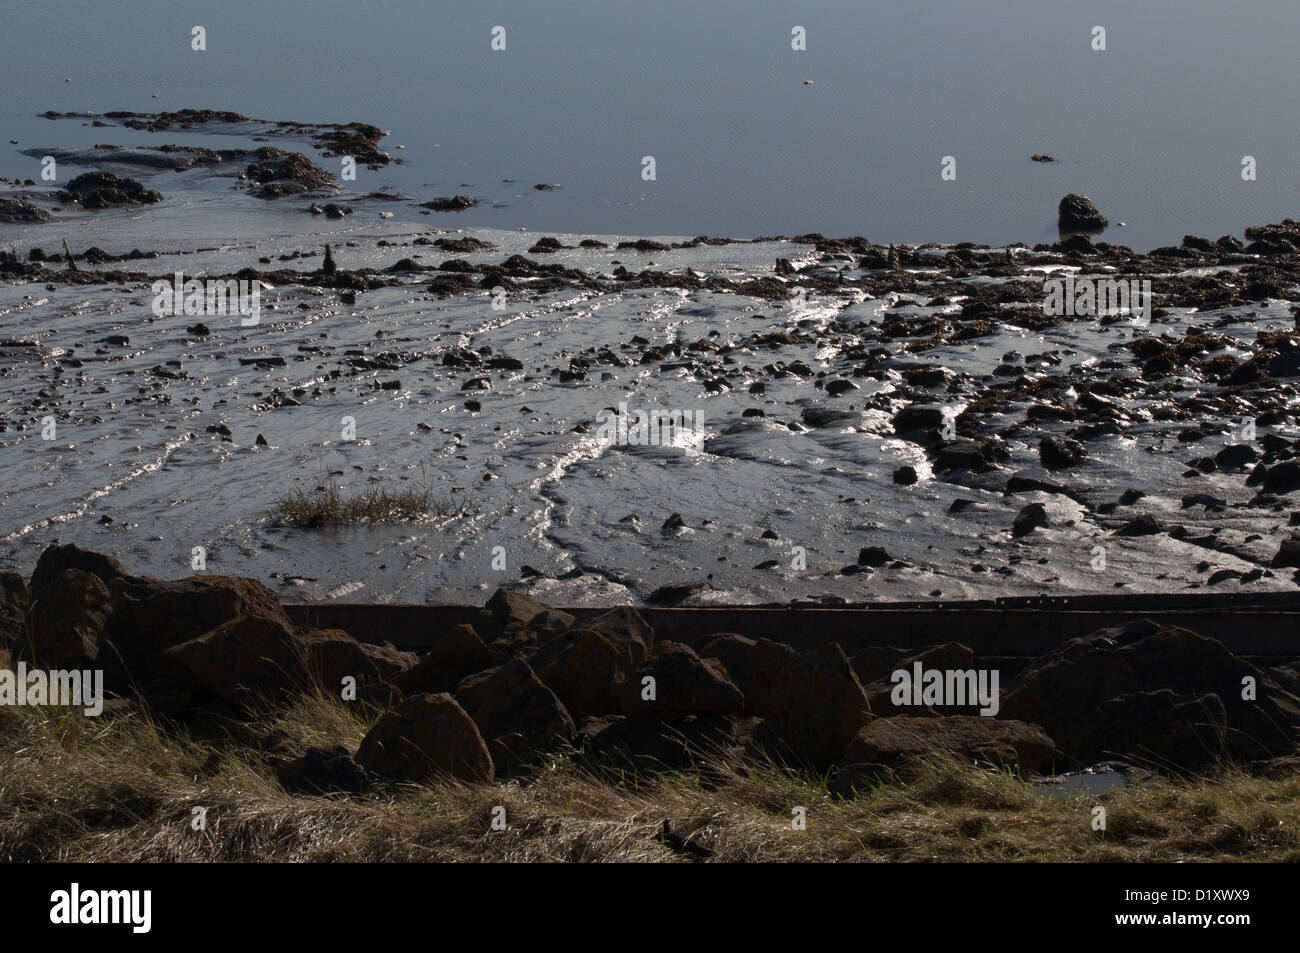 River Severn at low tide, mud bank, riverside, muddy pebbles, rock, stones Stock Photo